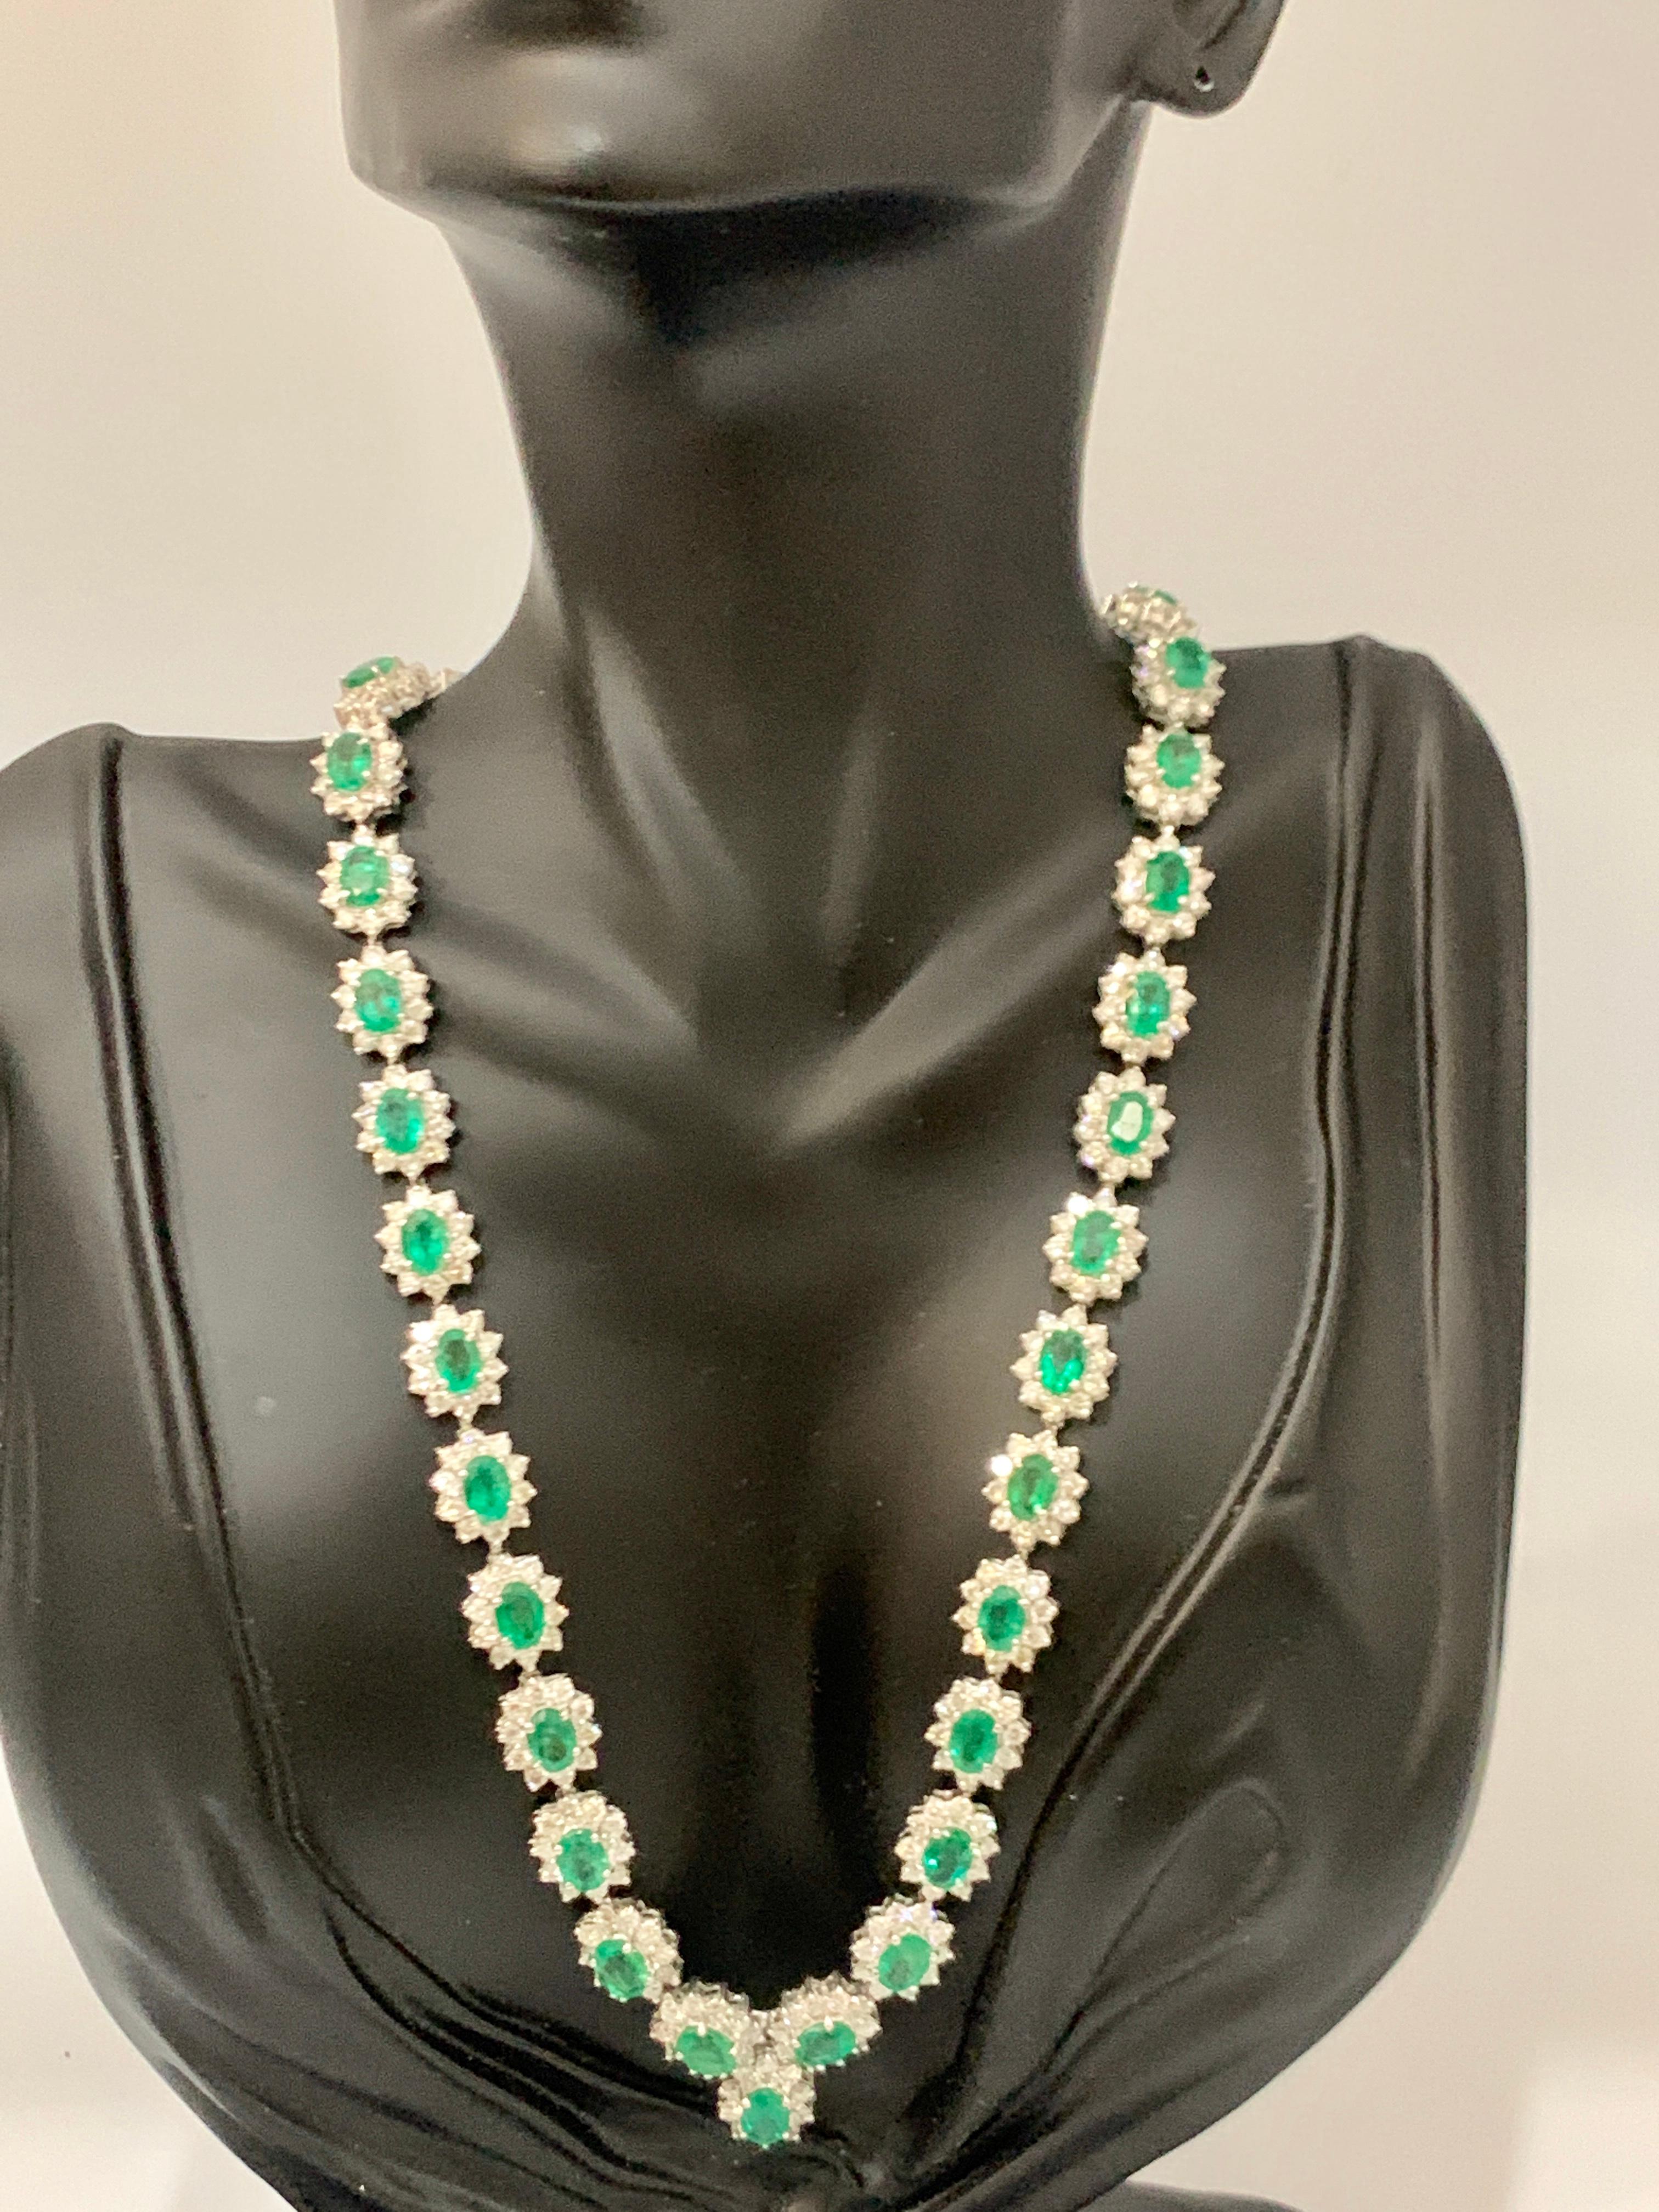 30 Carat Oval Shape Natural Emerald & 23 Carat Diamond Necklace in 18 Karat Gold For Sale 3